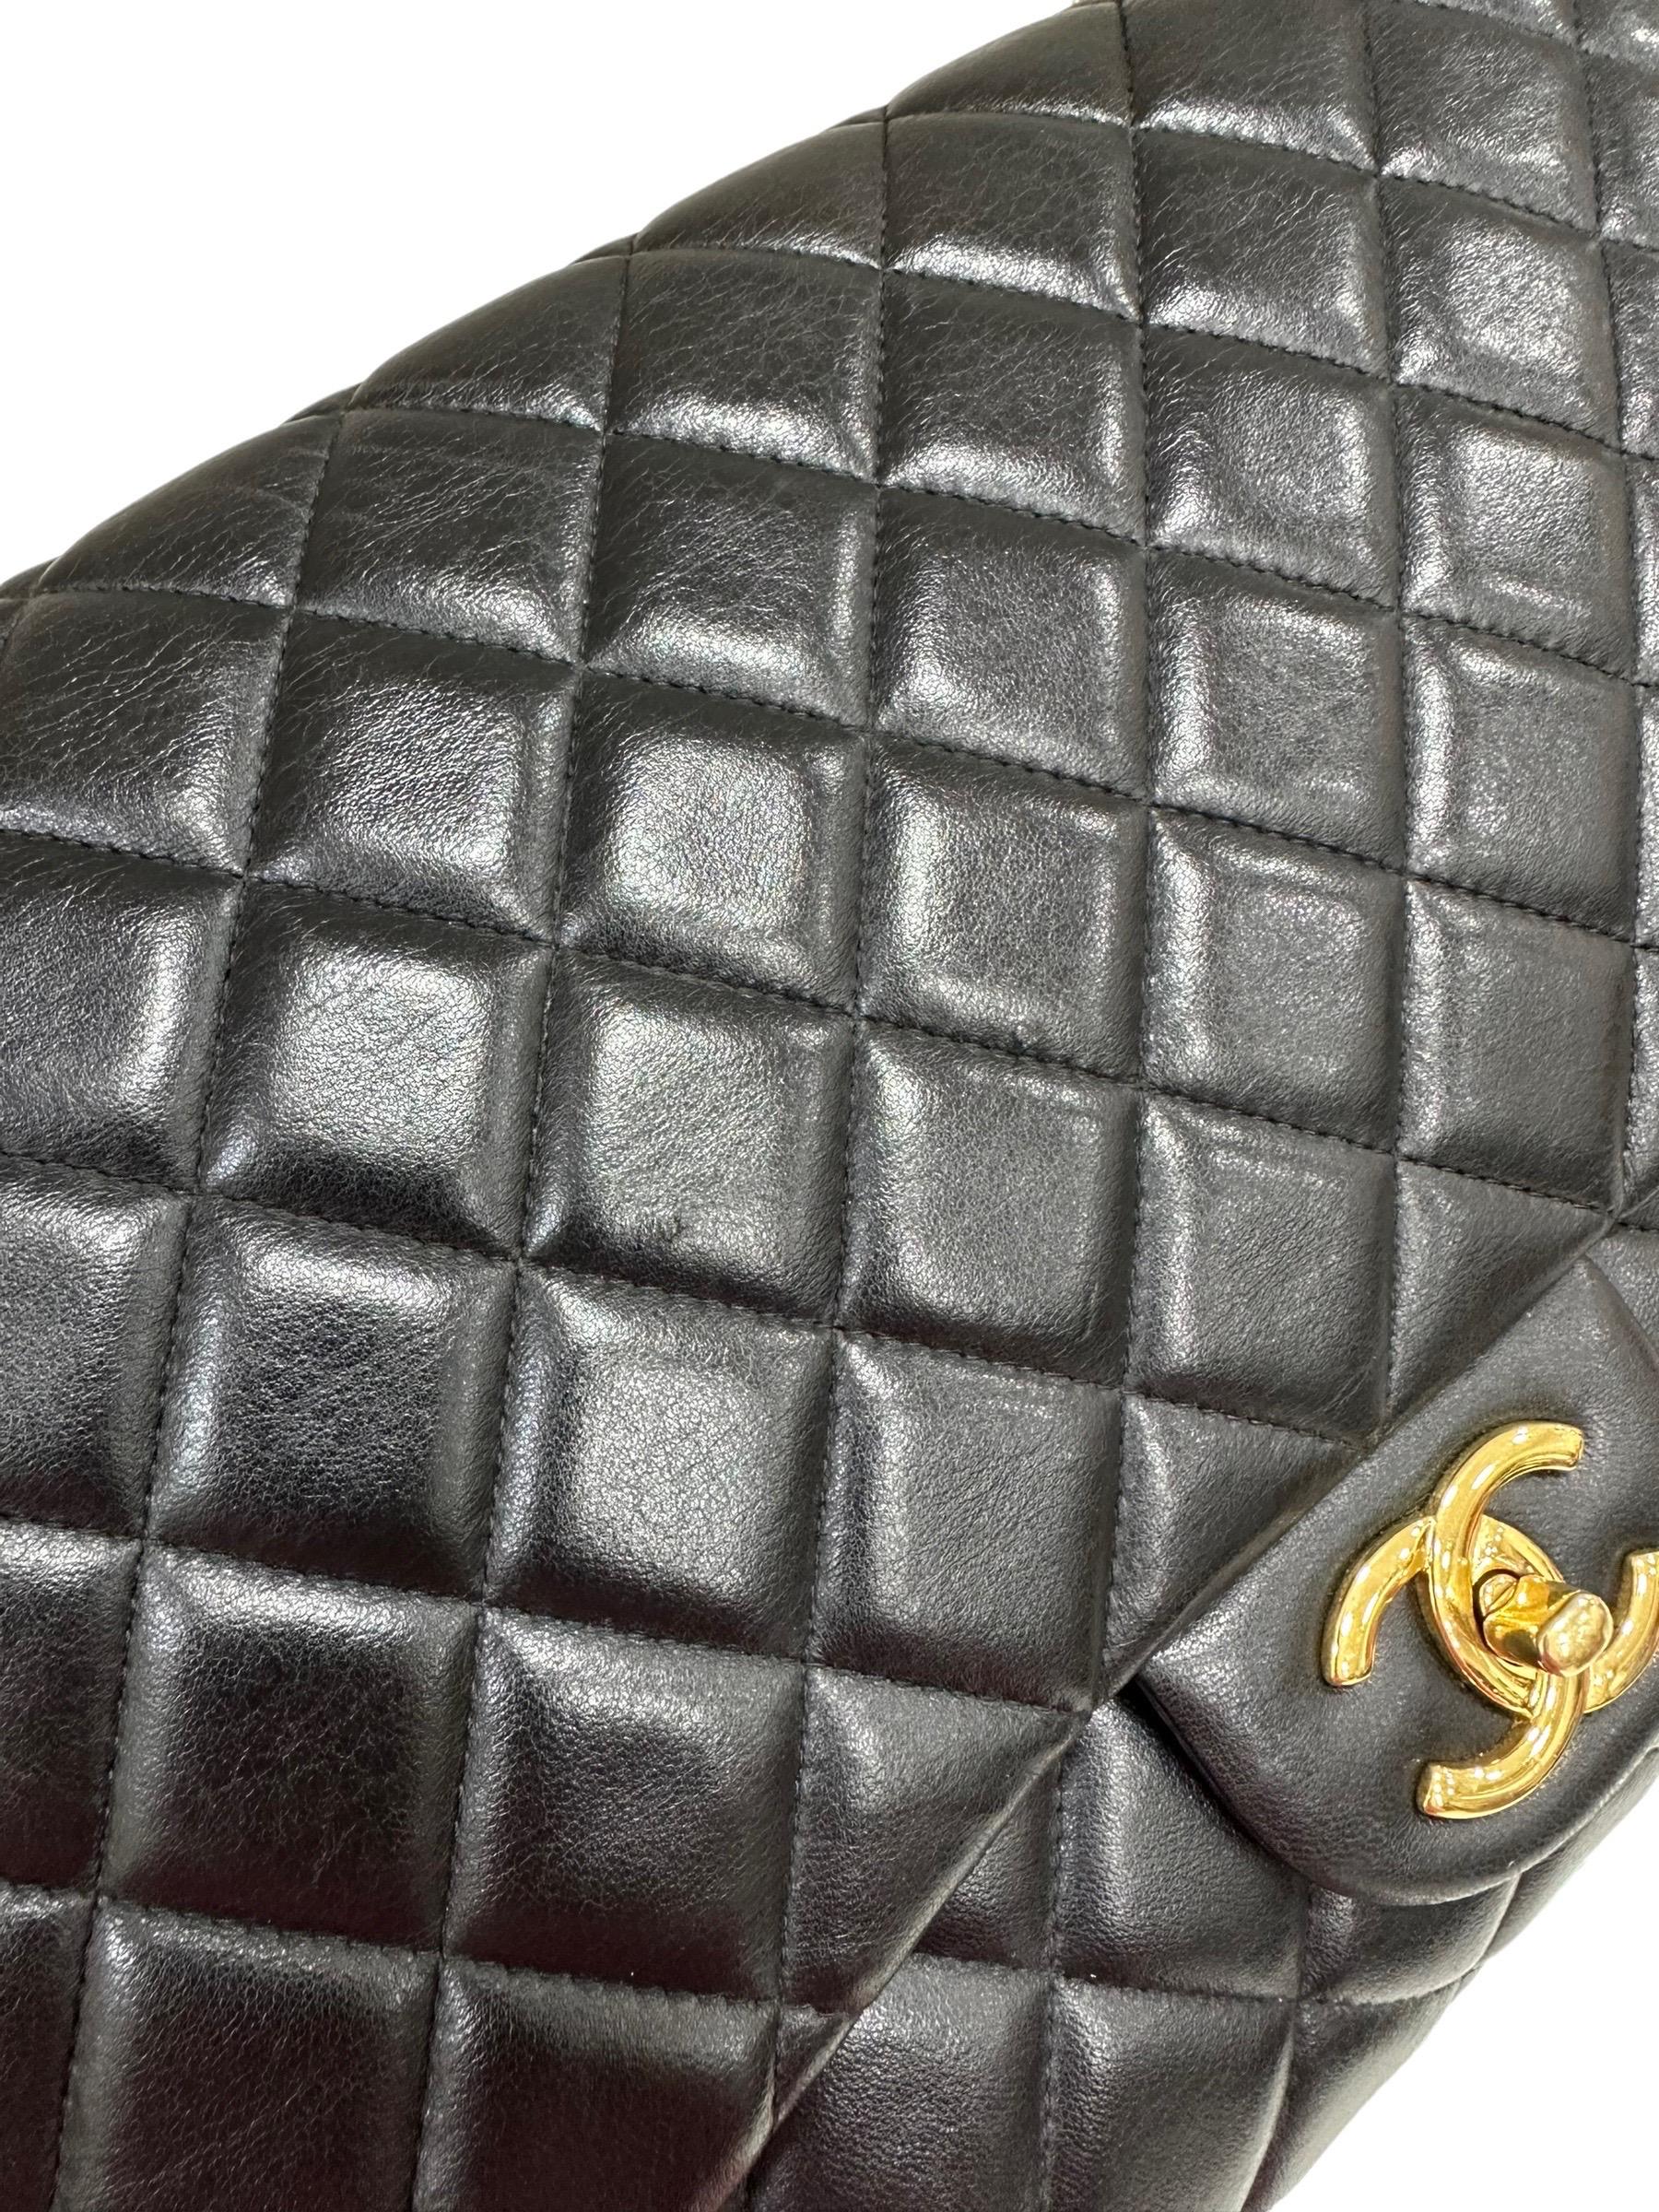 2011 Chanel Timeless Maxi Jumbo Black Leather Top Shoulder Bag For Sale 8